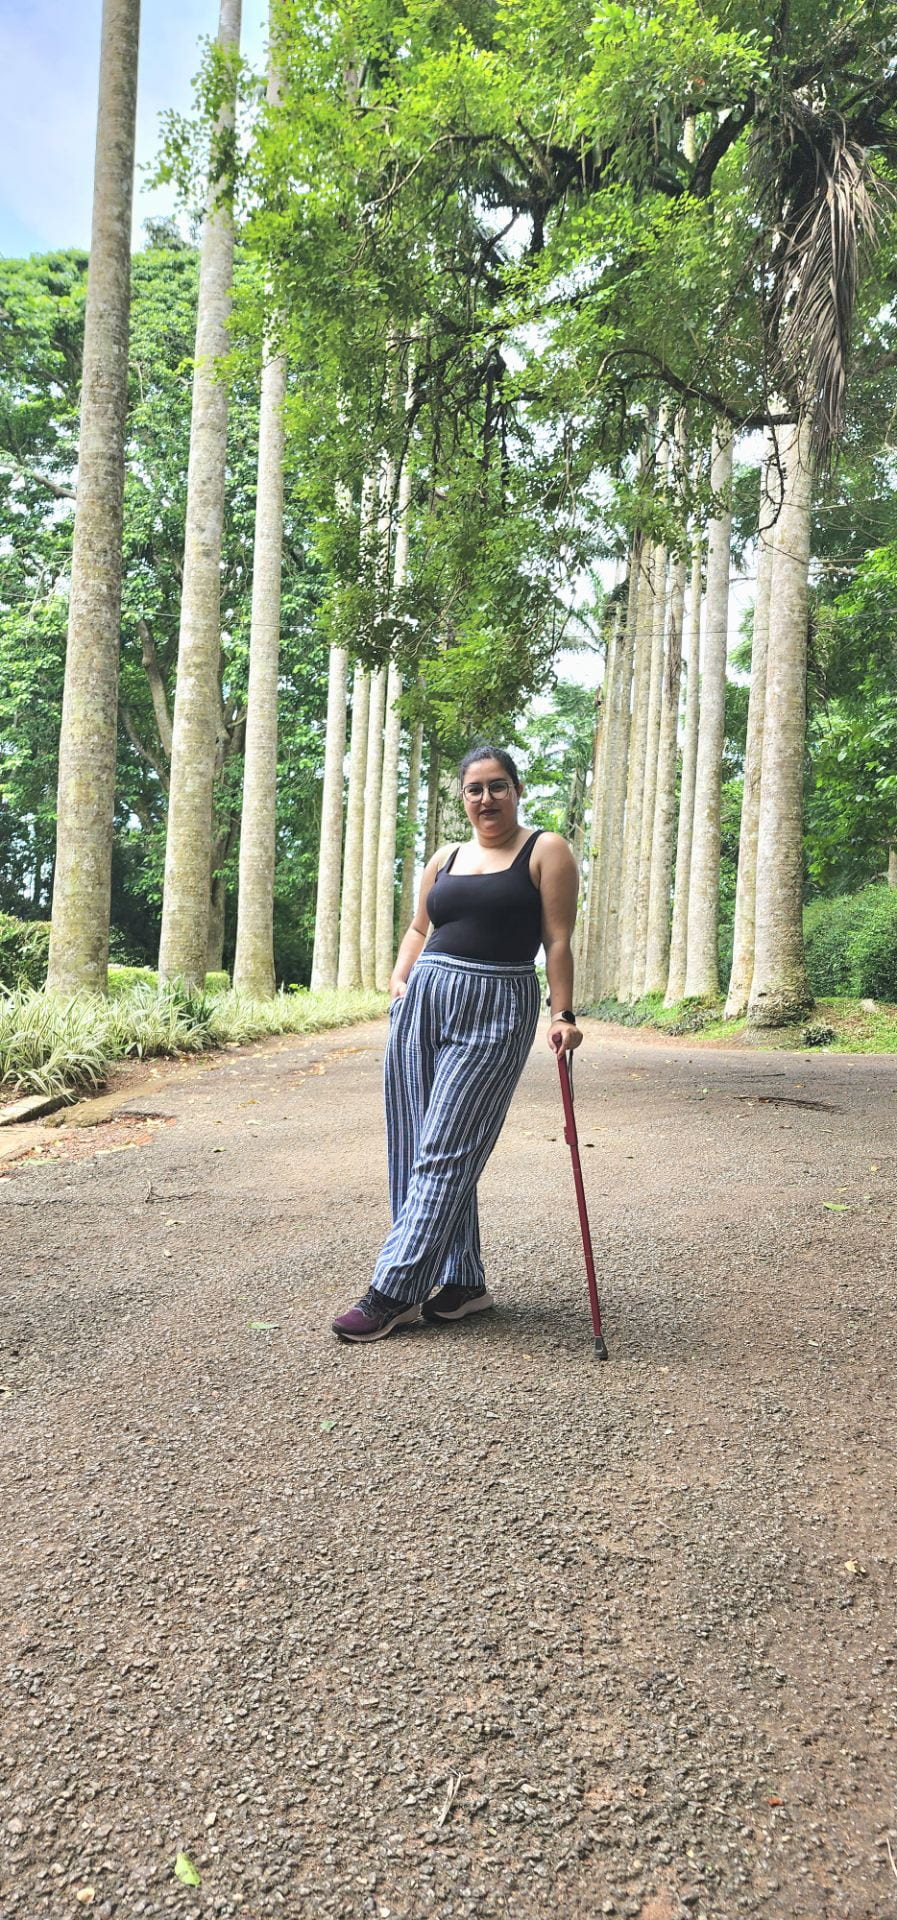 Nahla with her cane at the Aburi botanical gardens